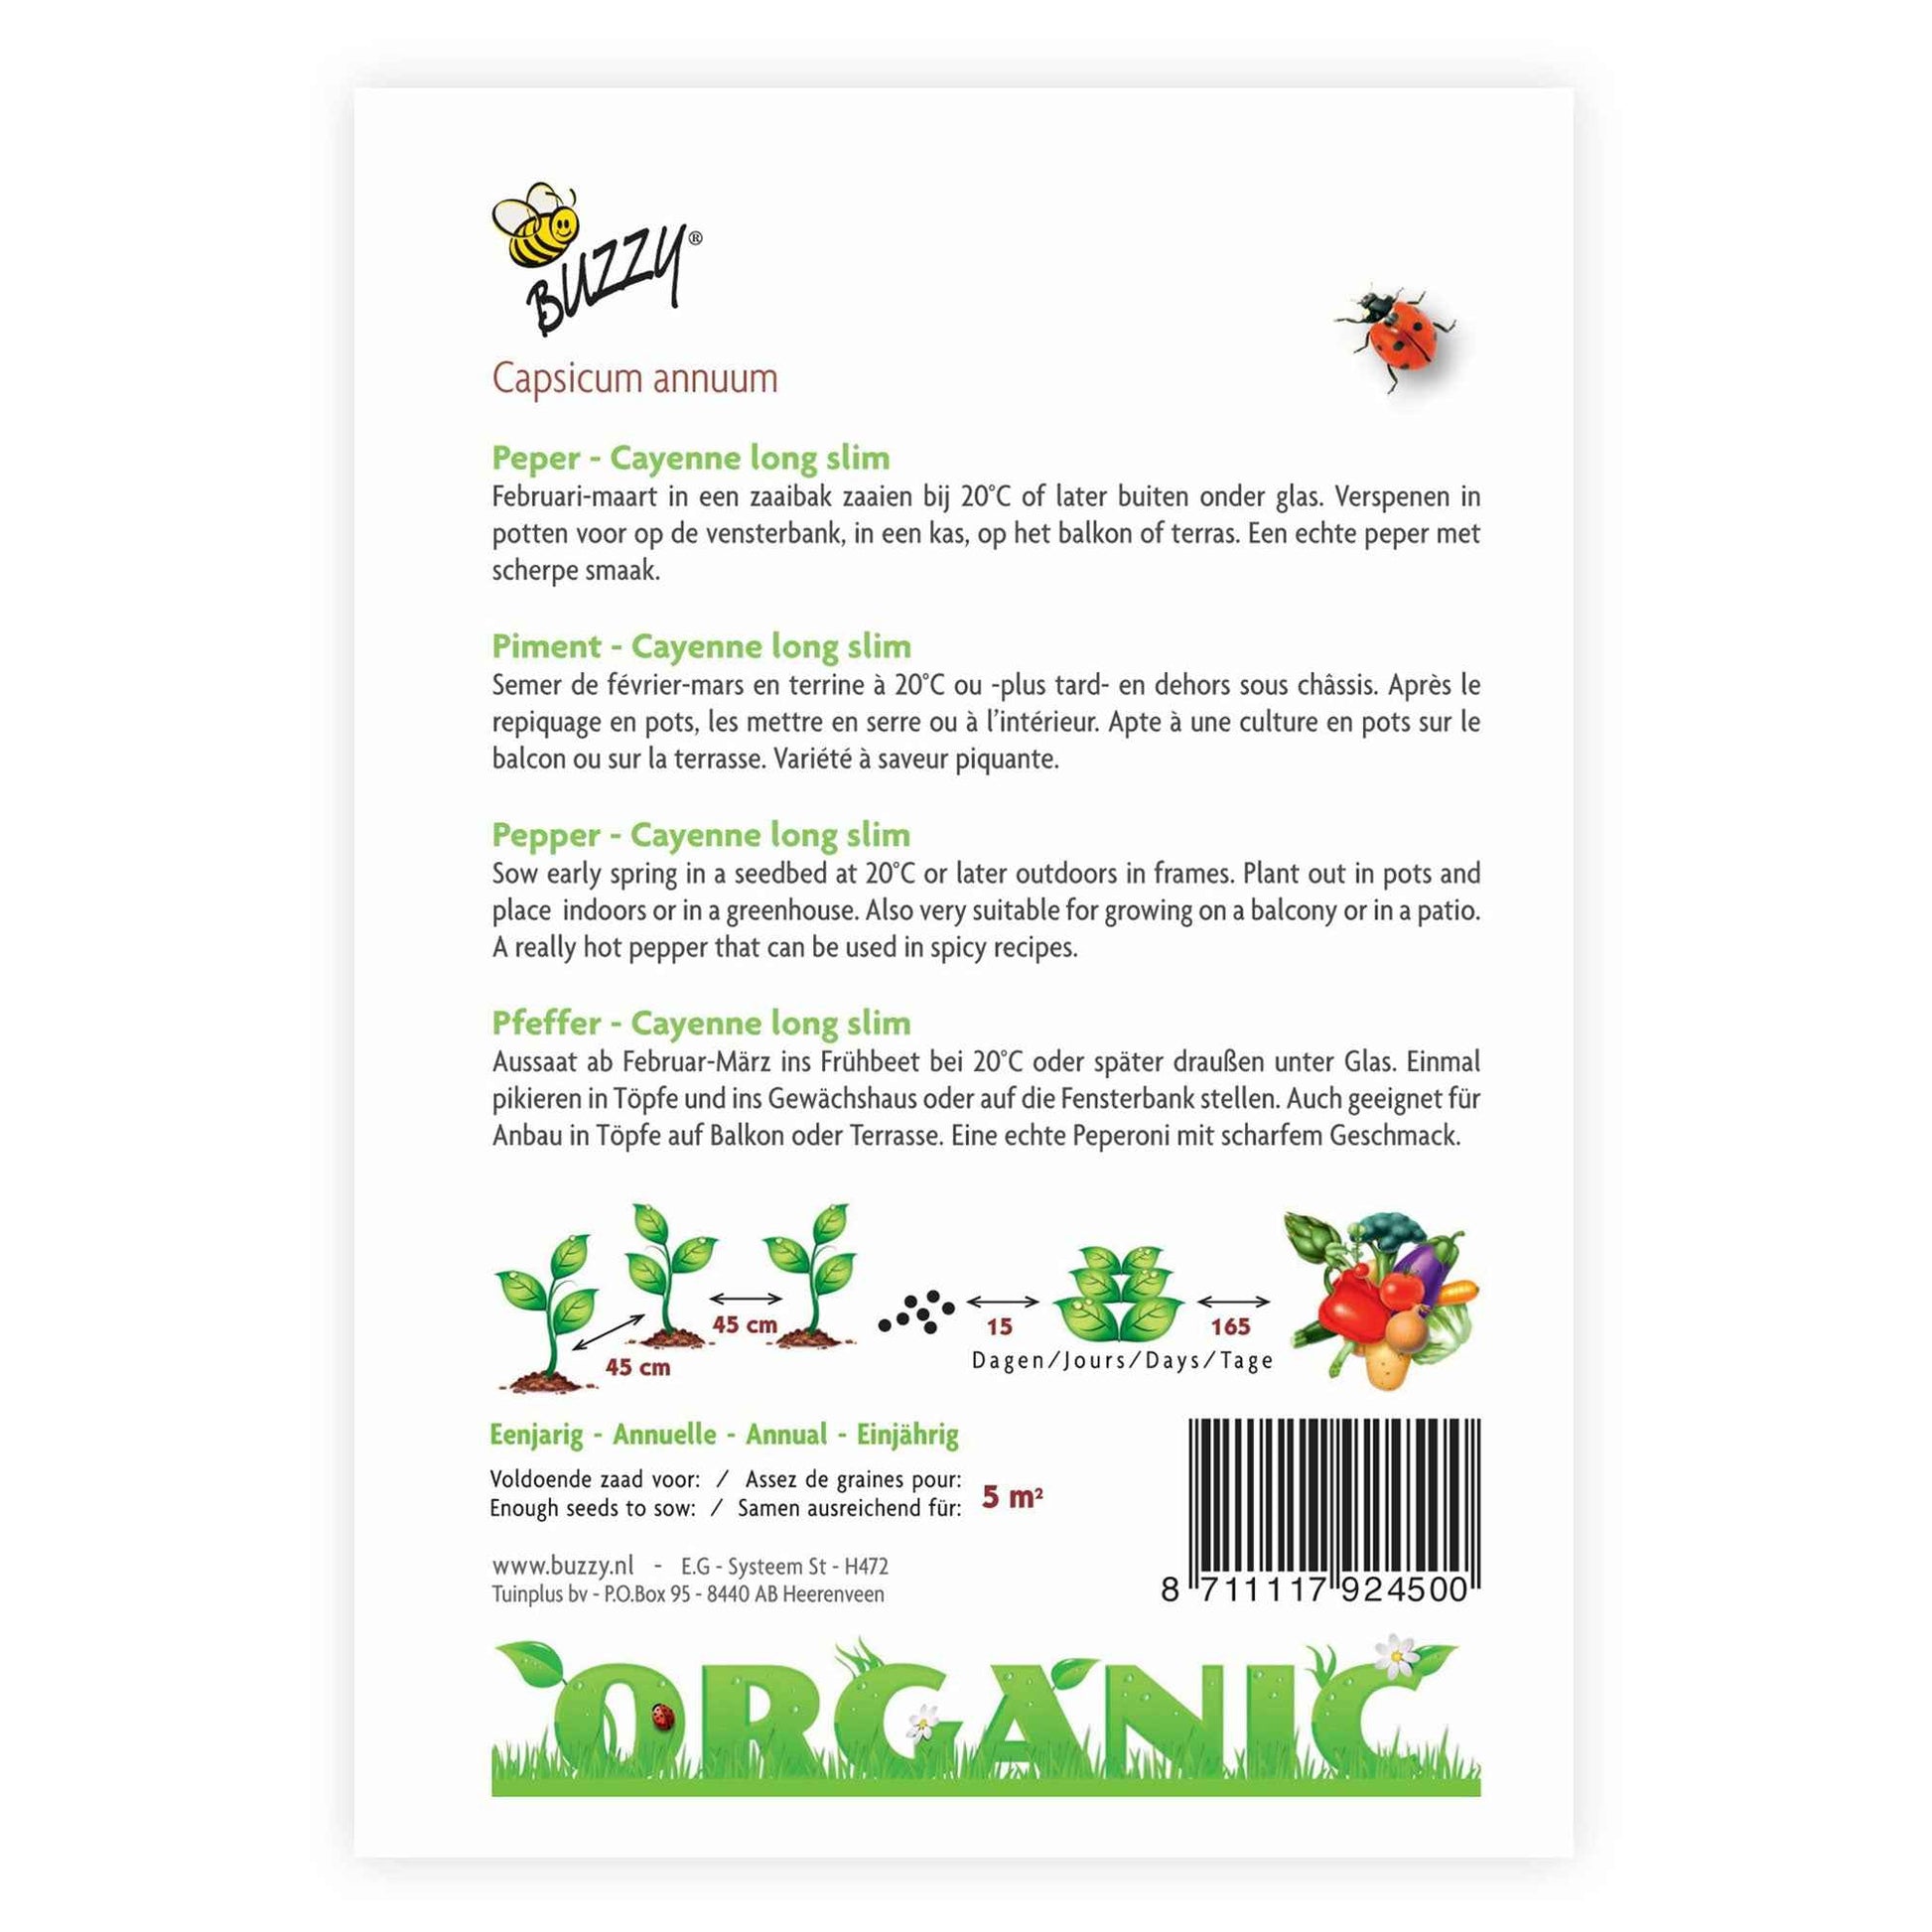 Pfeffer Capsicum 'Long Slim' - Biologisch 5 m² - Gemüsesamen - Bio-Samen